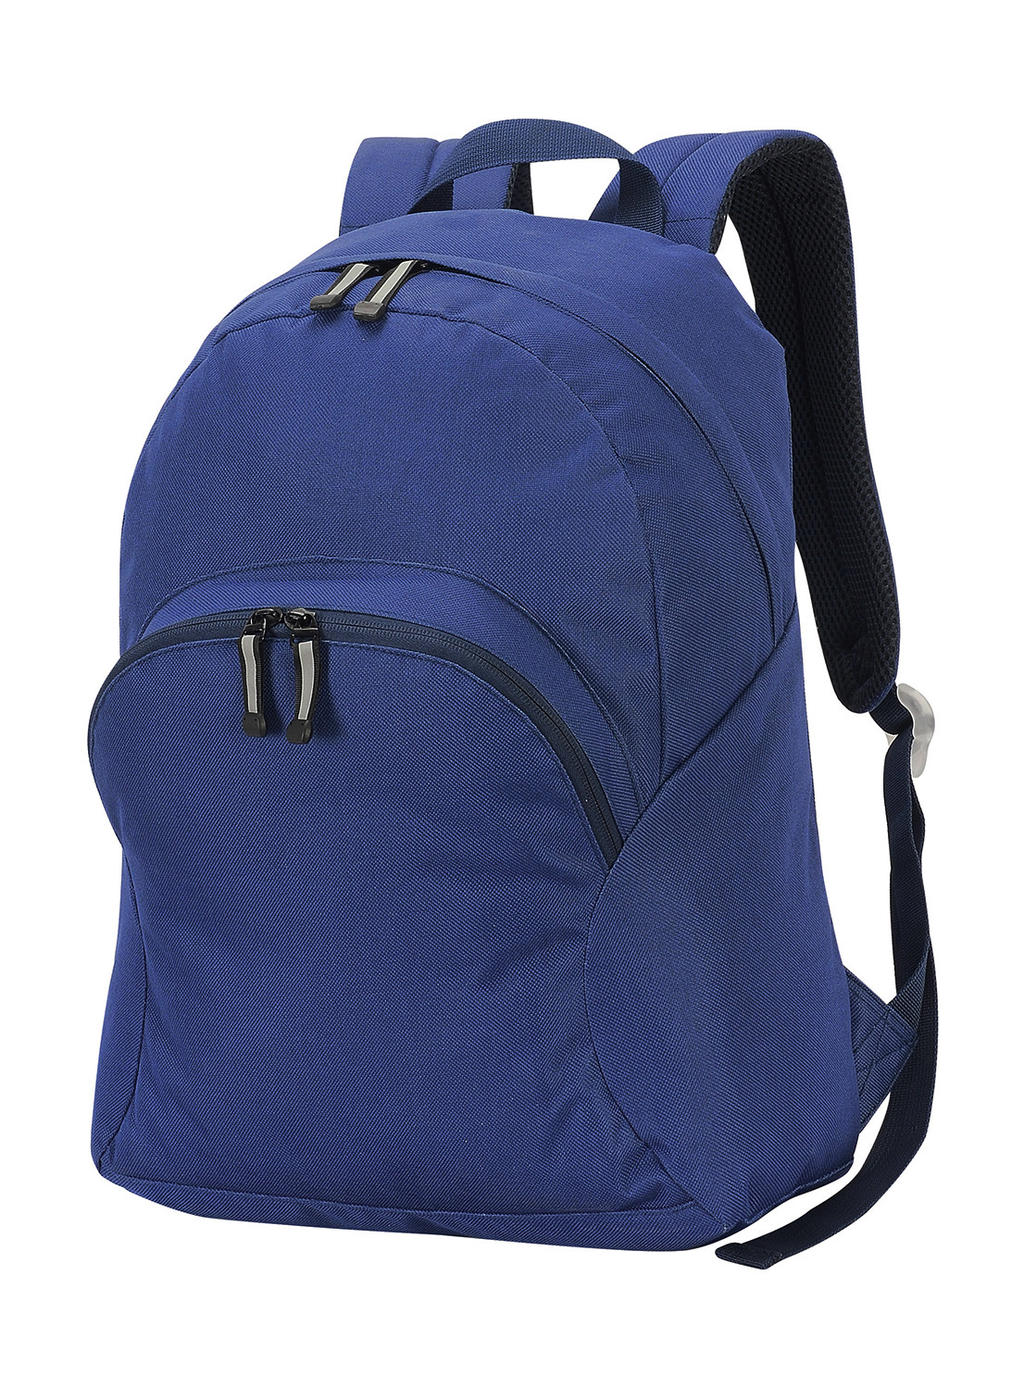  Milan Backpack in Farbe Navy